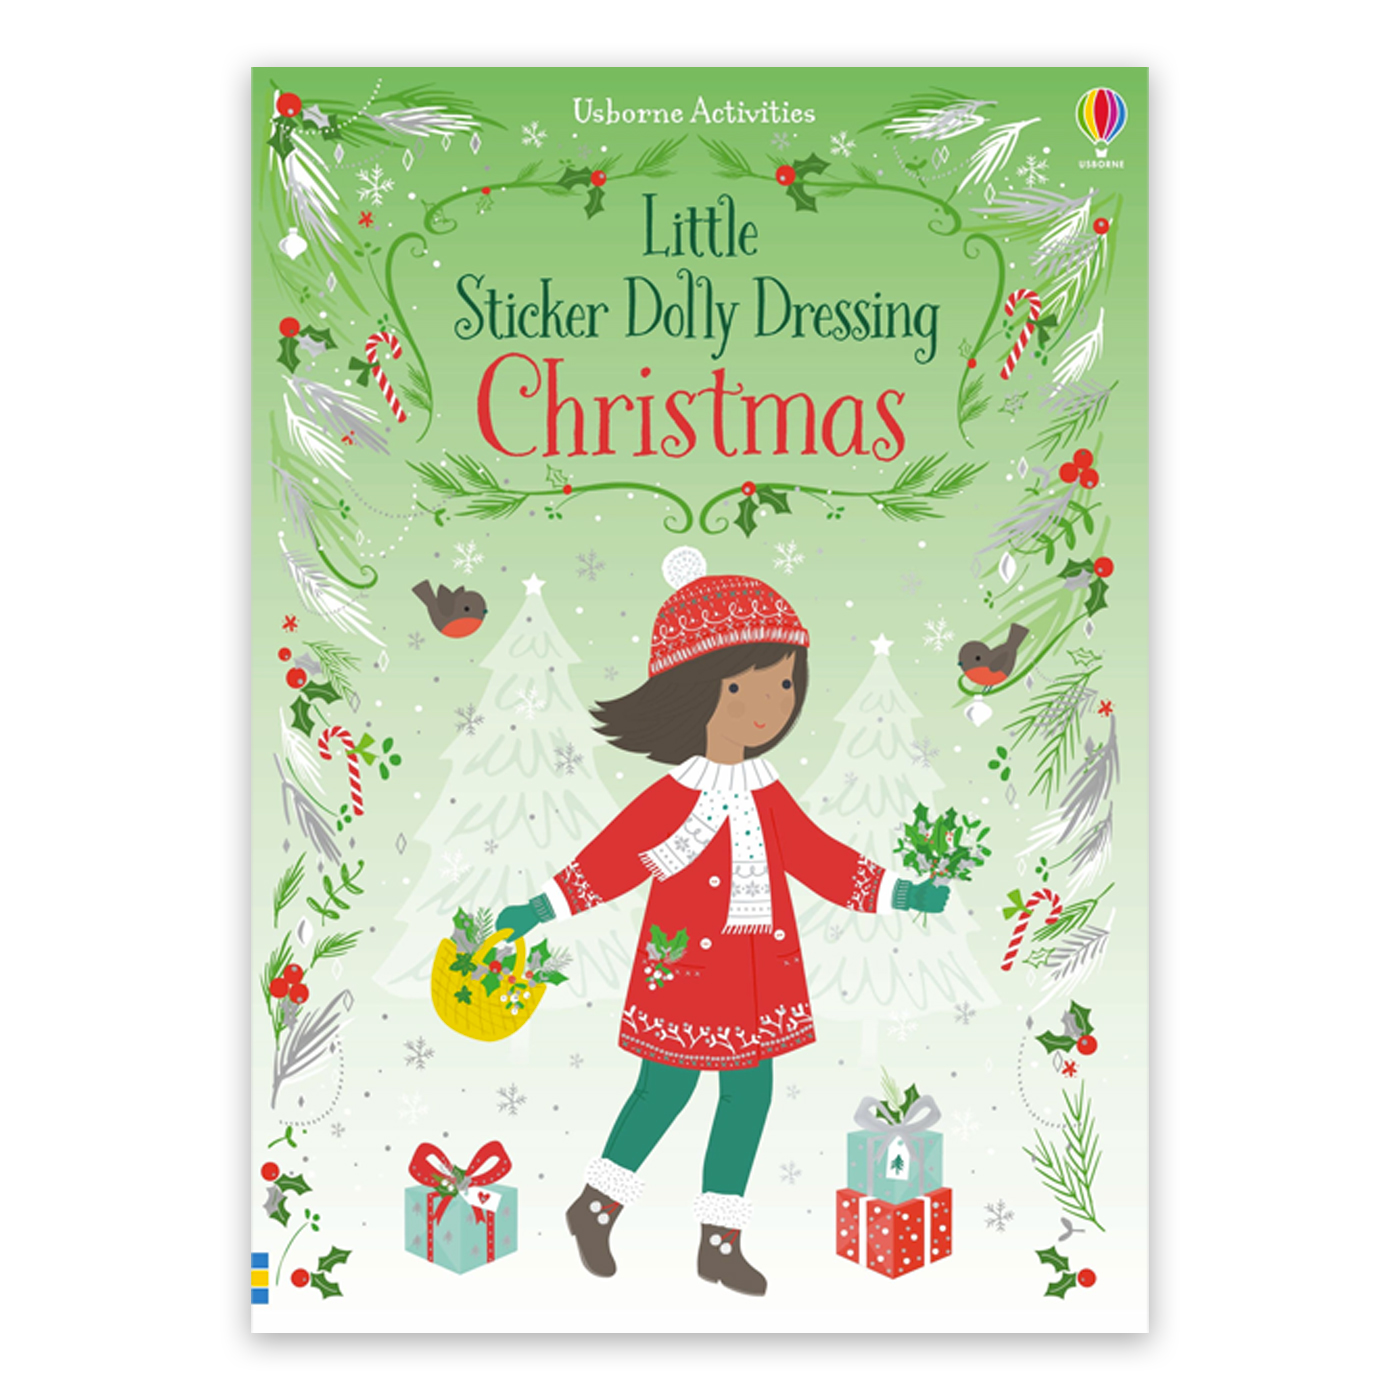  Little Sticker Dolly Dressing Christmas